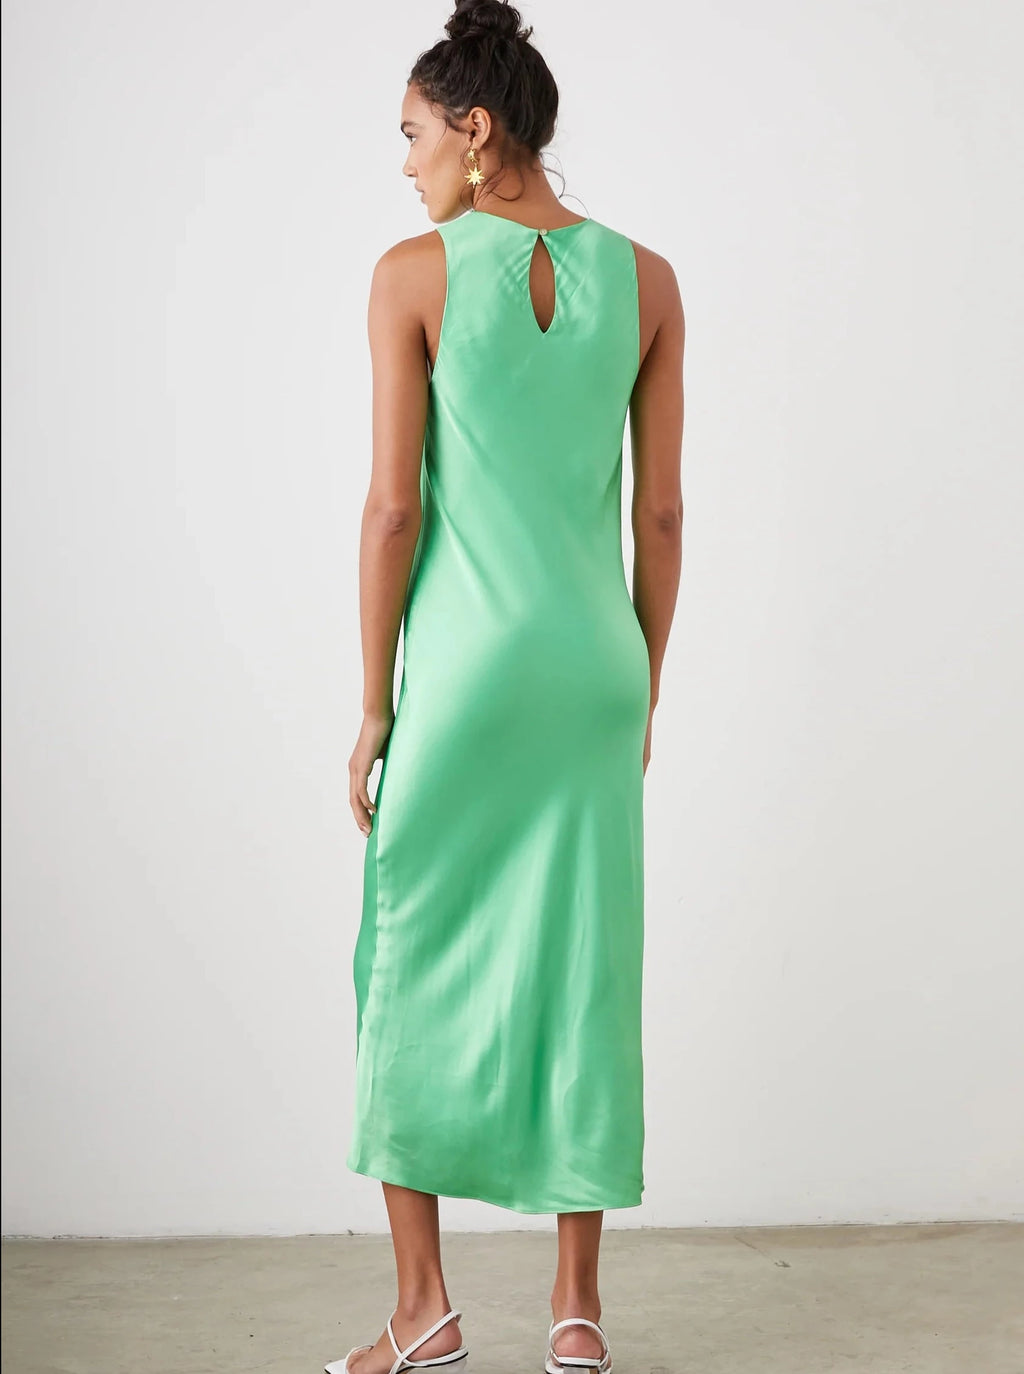 Fiona Dress in Vibrant Green